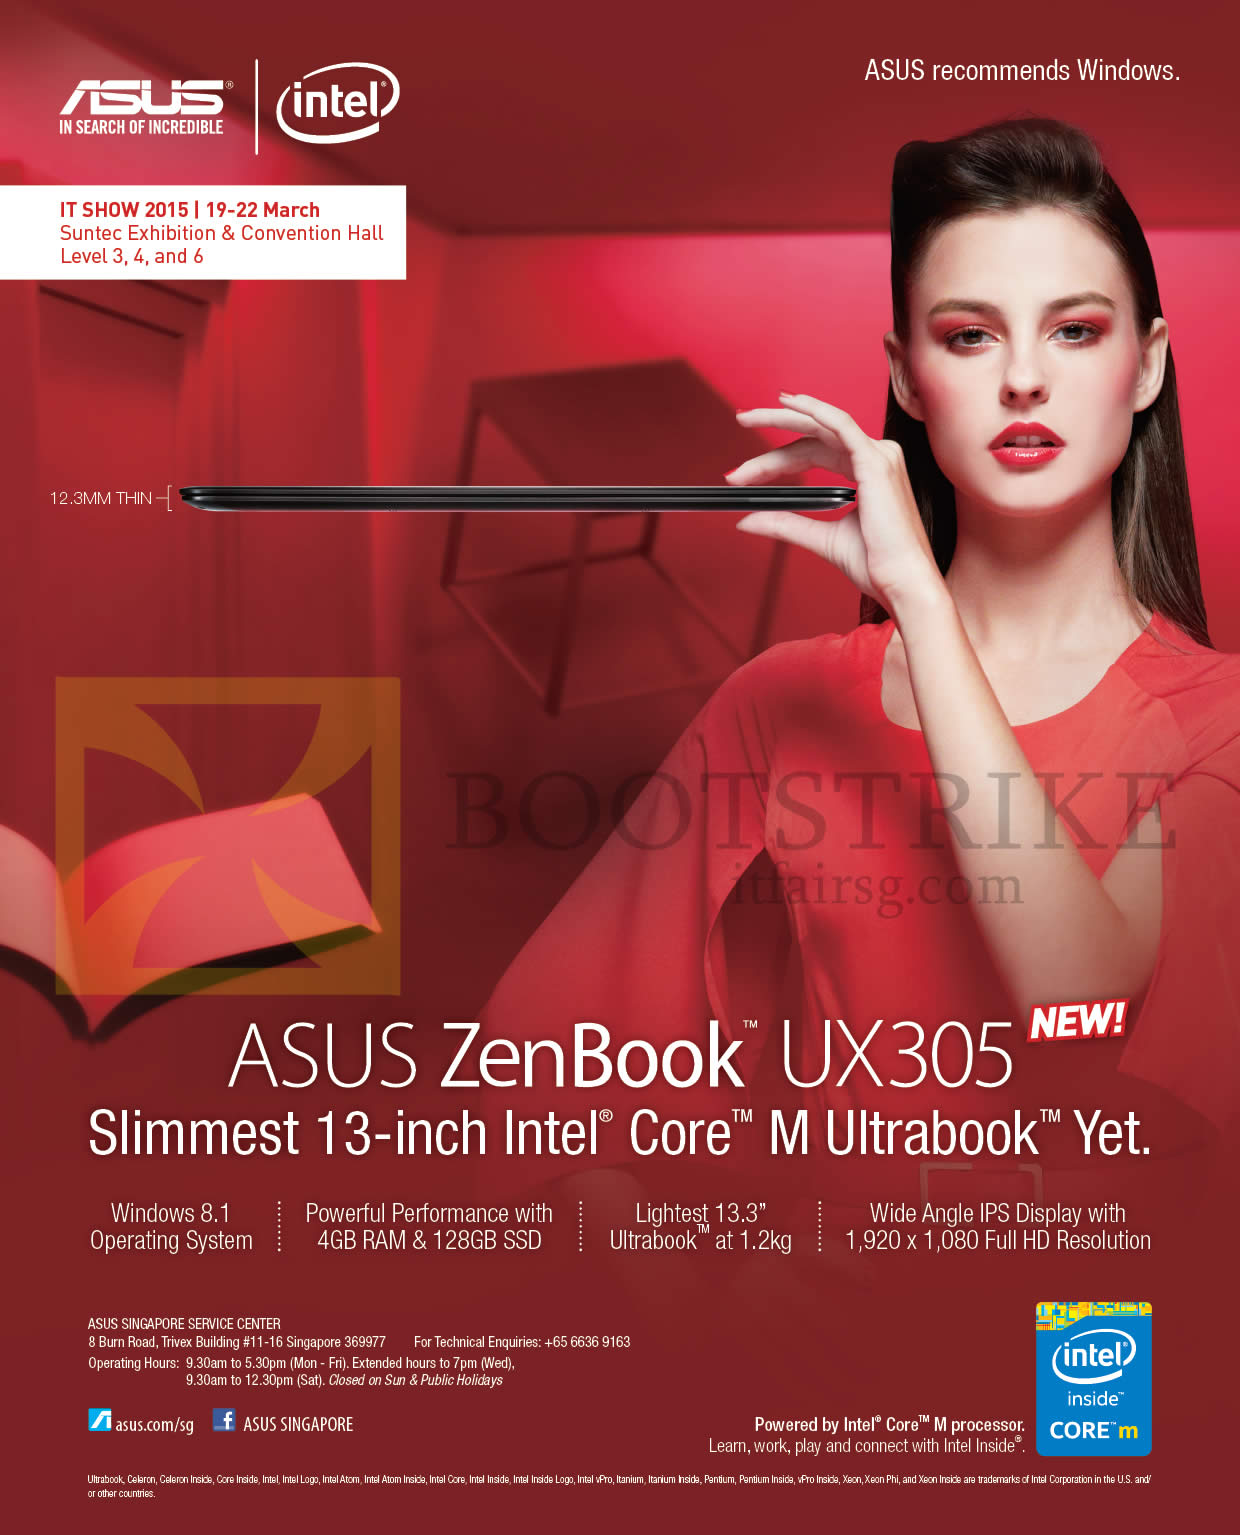 IT SHOW 2015 price list image brochure of ASUS Notebook Zenbook UX305 Features